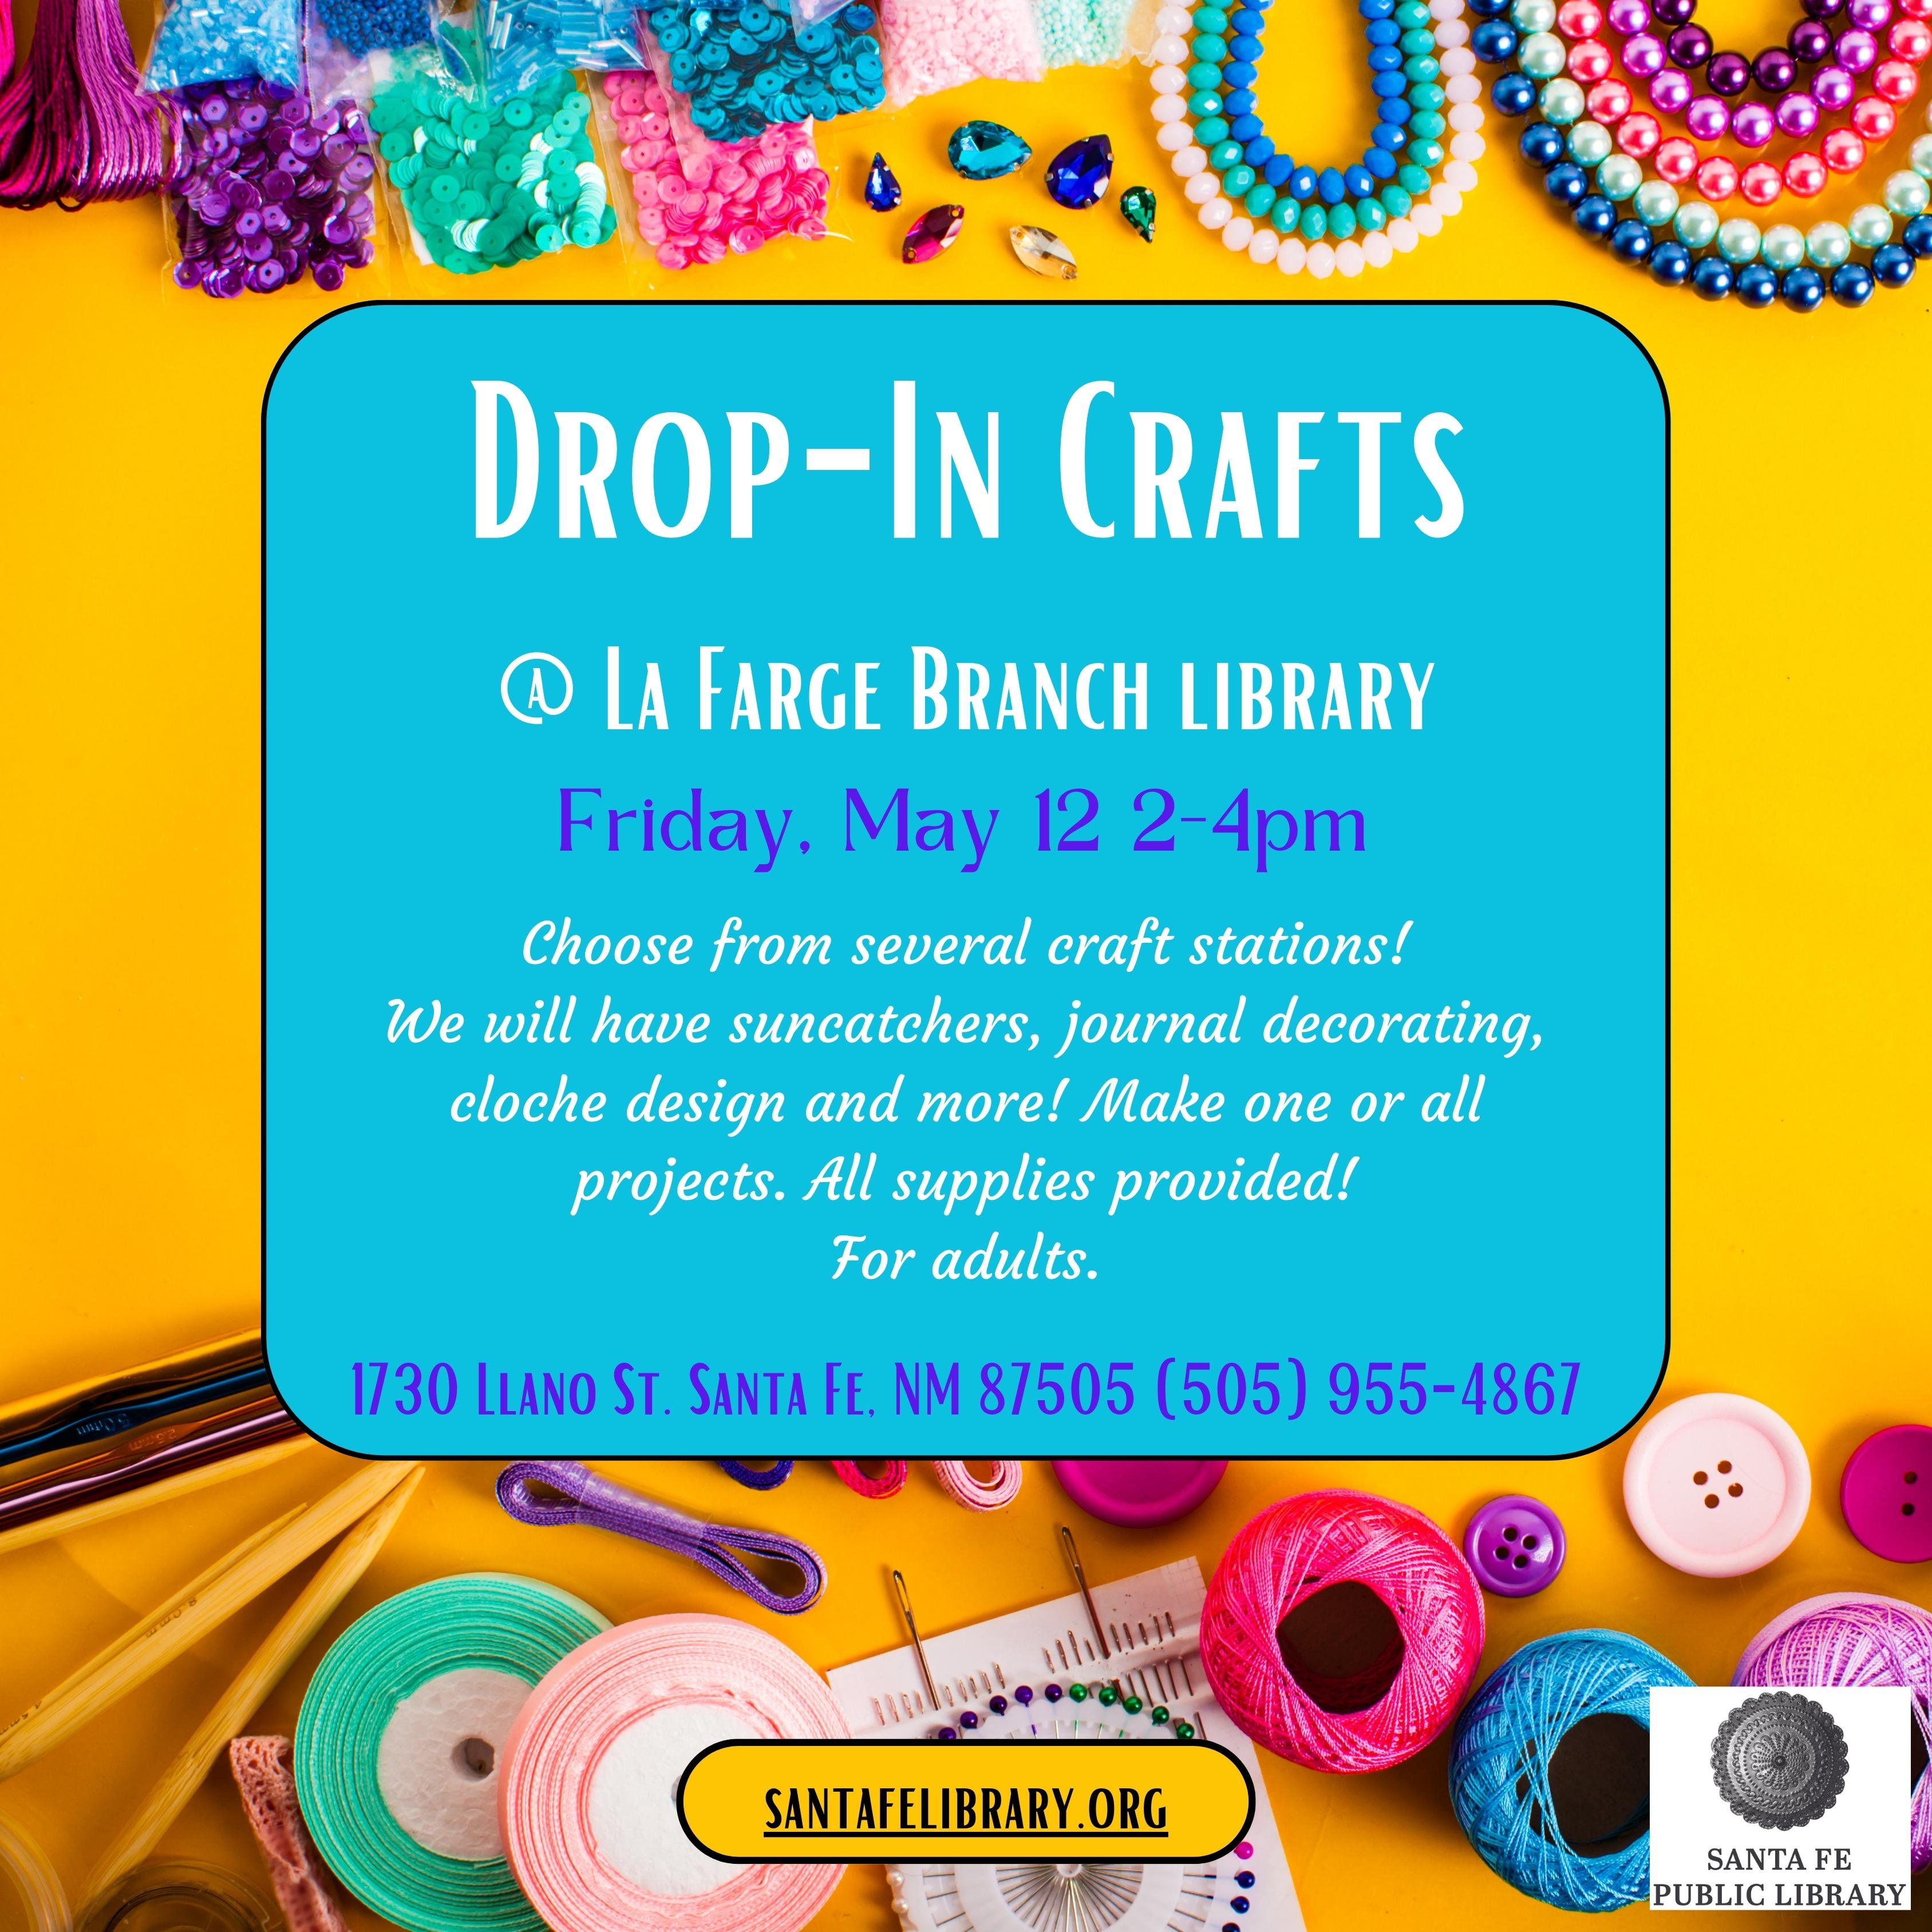 Drop-in Crafts